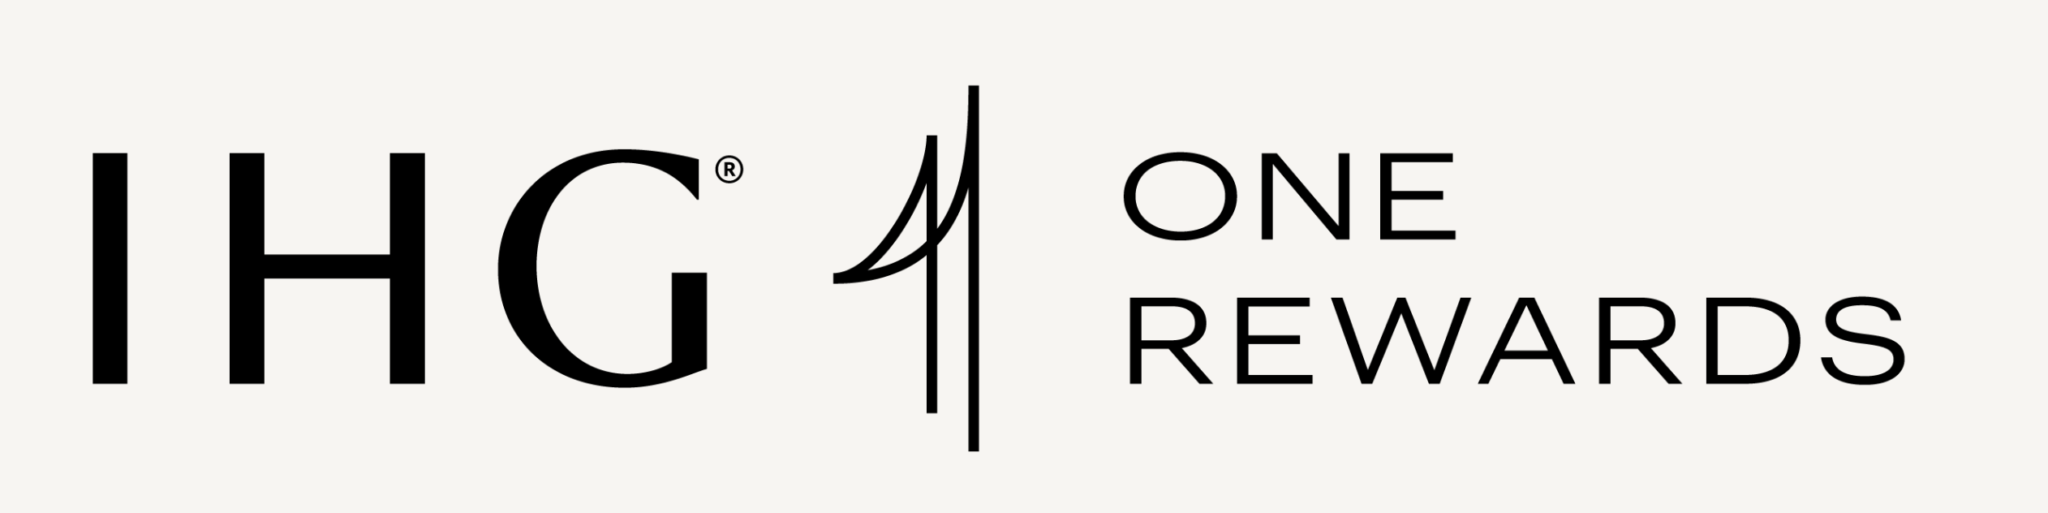 IHG One Rewards Logo 